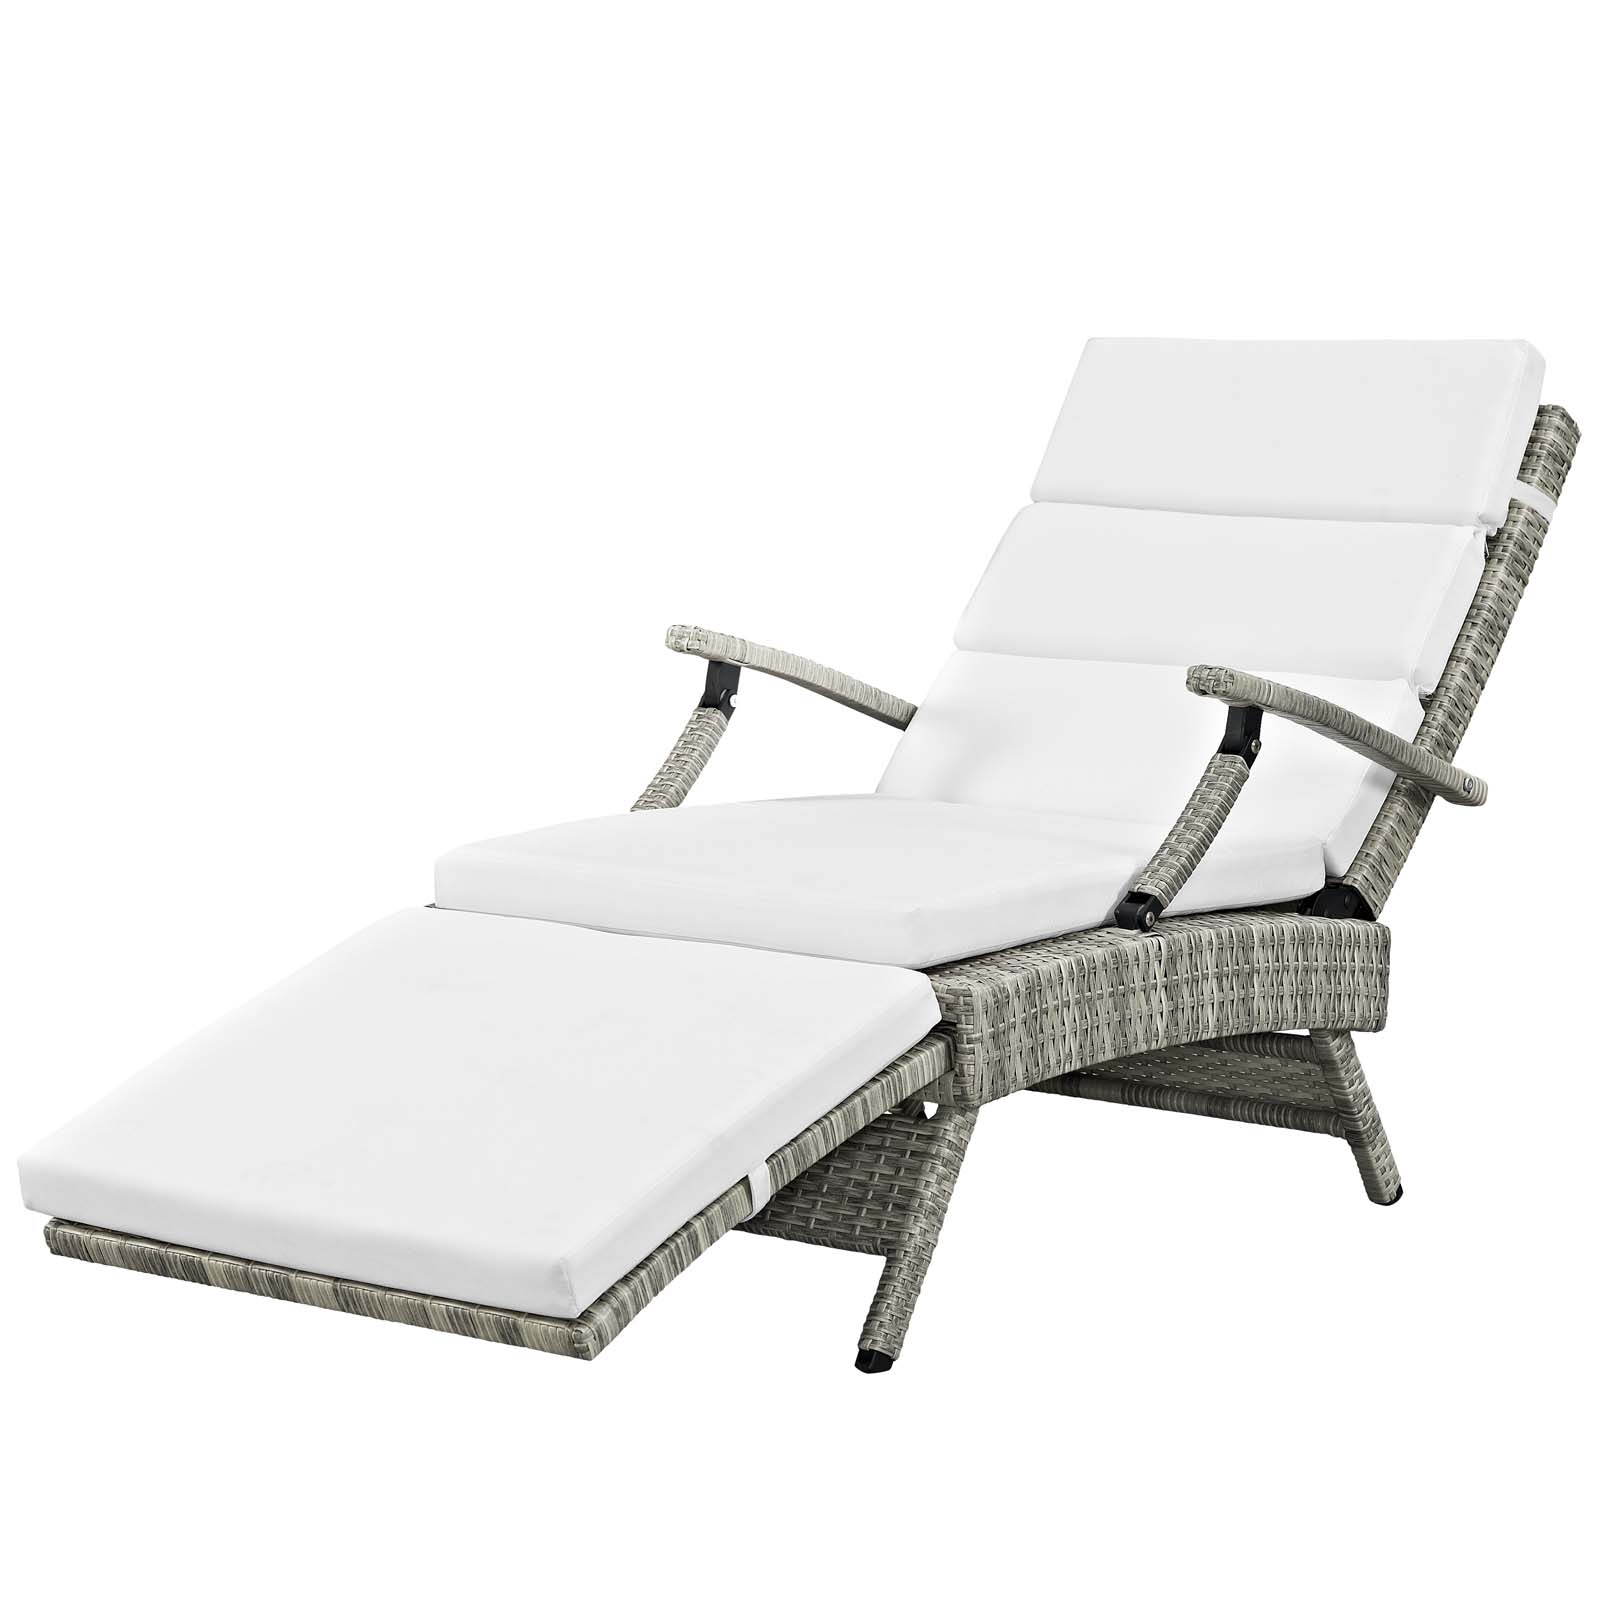 Contemporary Modern Urban Designer Outdoor Patio Balcony Garden Furniture Lounge Chair Chaise, Fabric Rattan Wicker, White - image 4 of 9